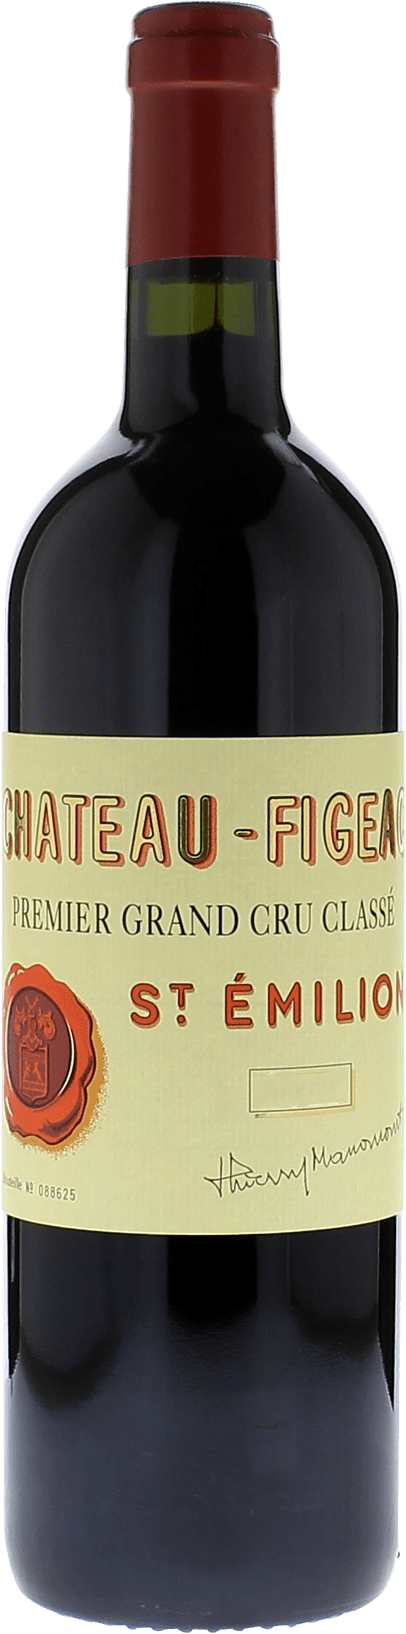 Figeac 1986 1er Grand cru B class Saint-Emilion, Bordeaux rouge